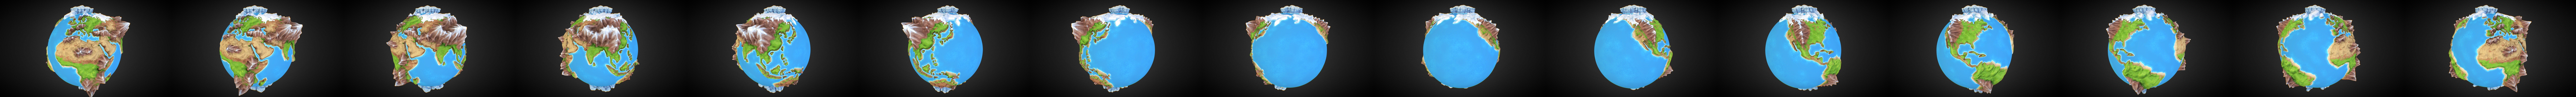 slendytubbies world - 3D model by cris170607 (@cris170607) [105ebb5]